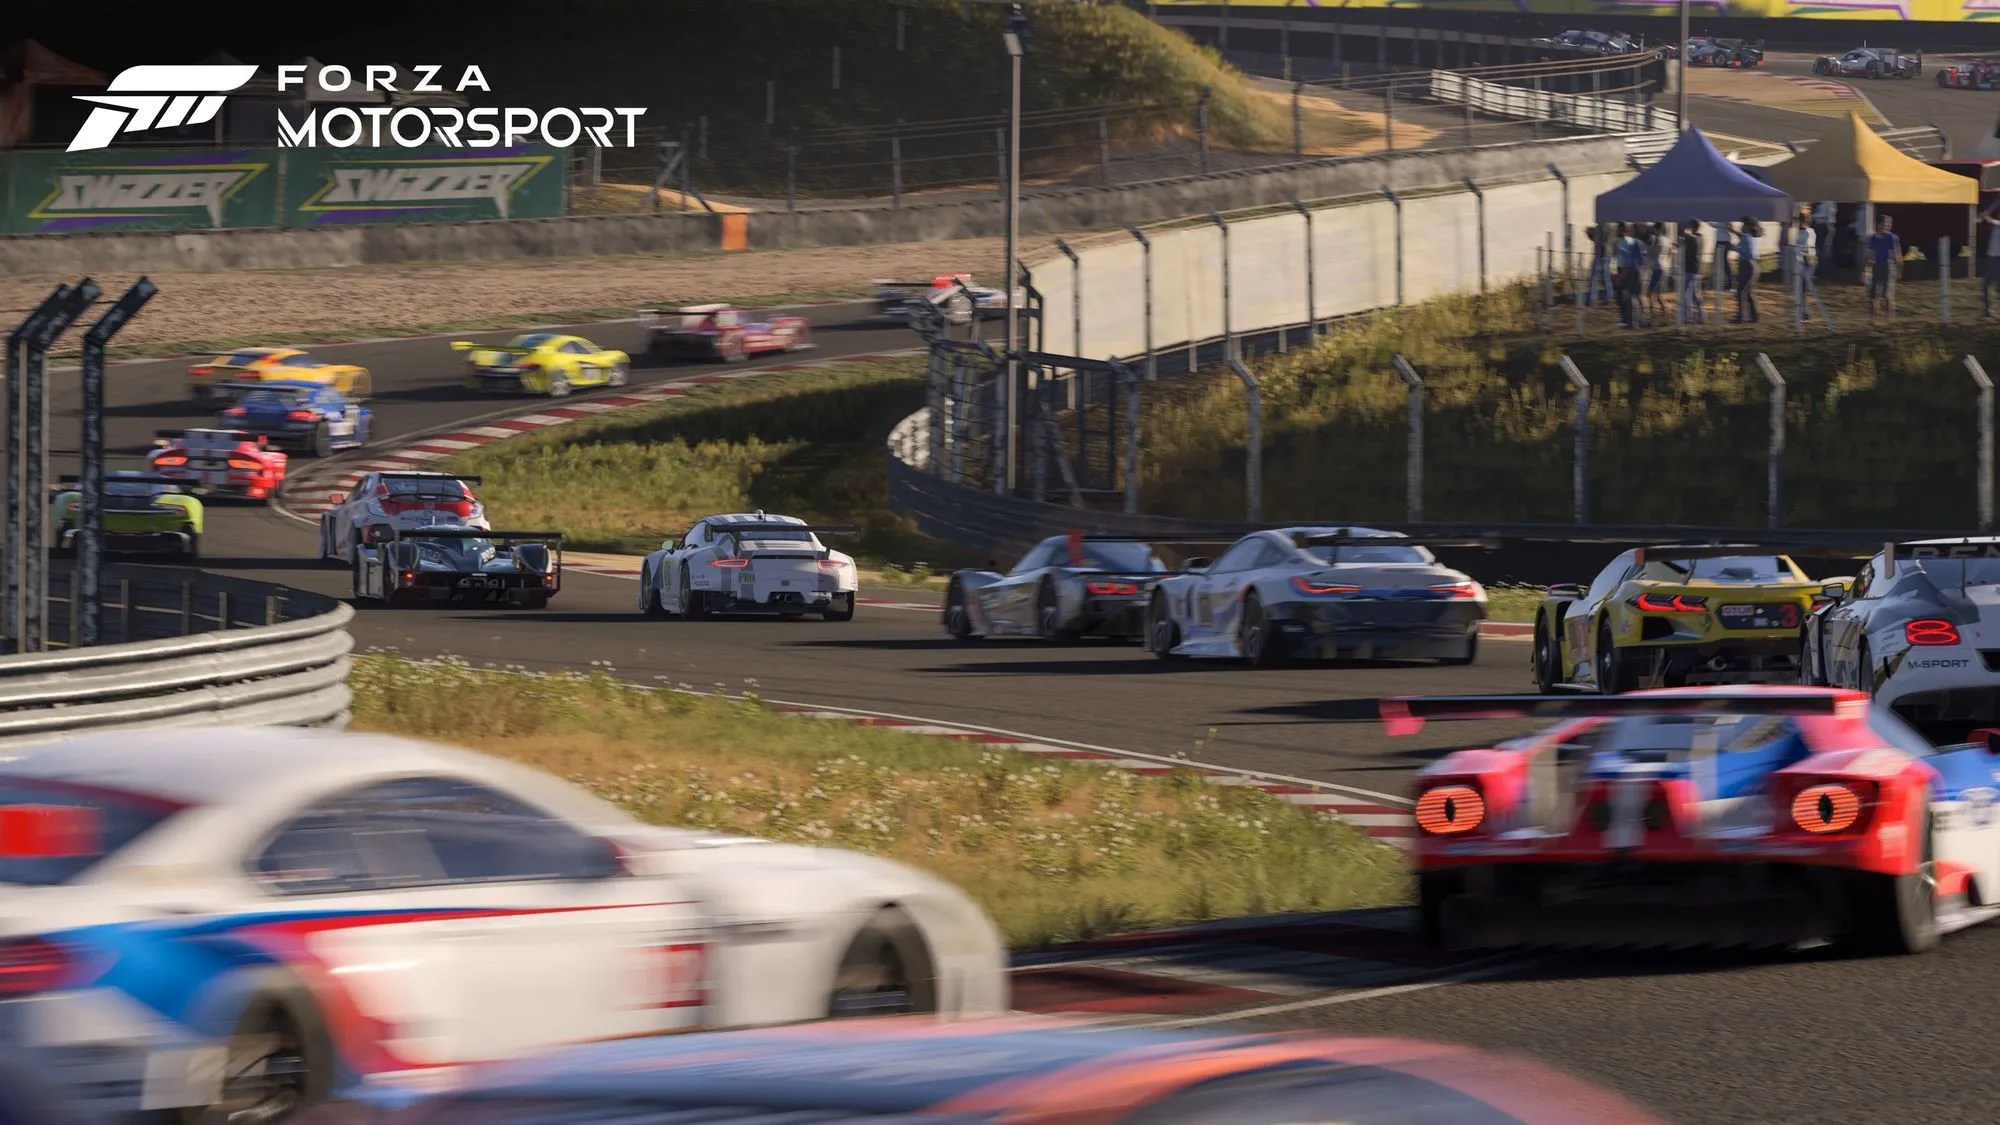 Forza Motorsport 6 - E3 gameplay trailer song/music Elias